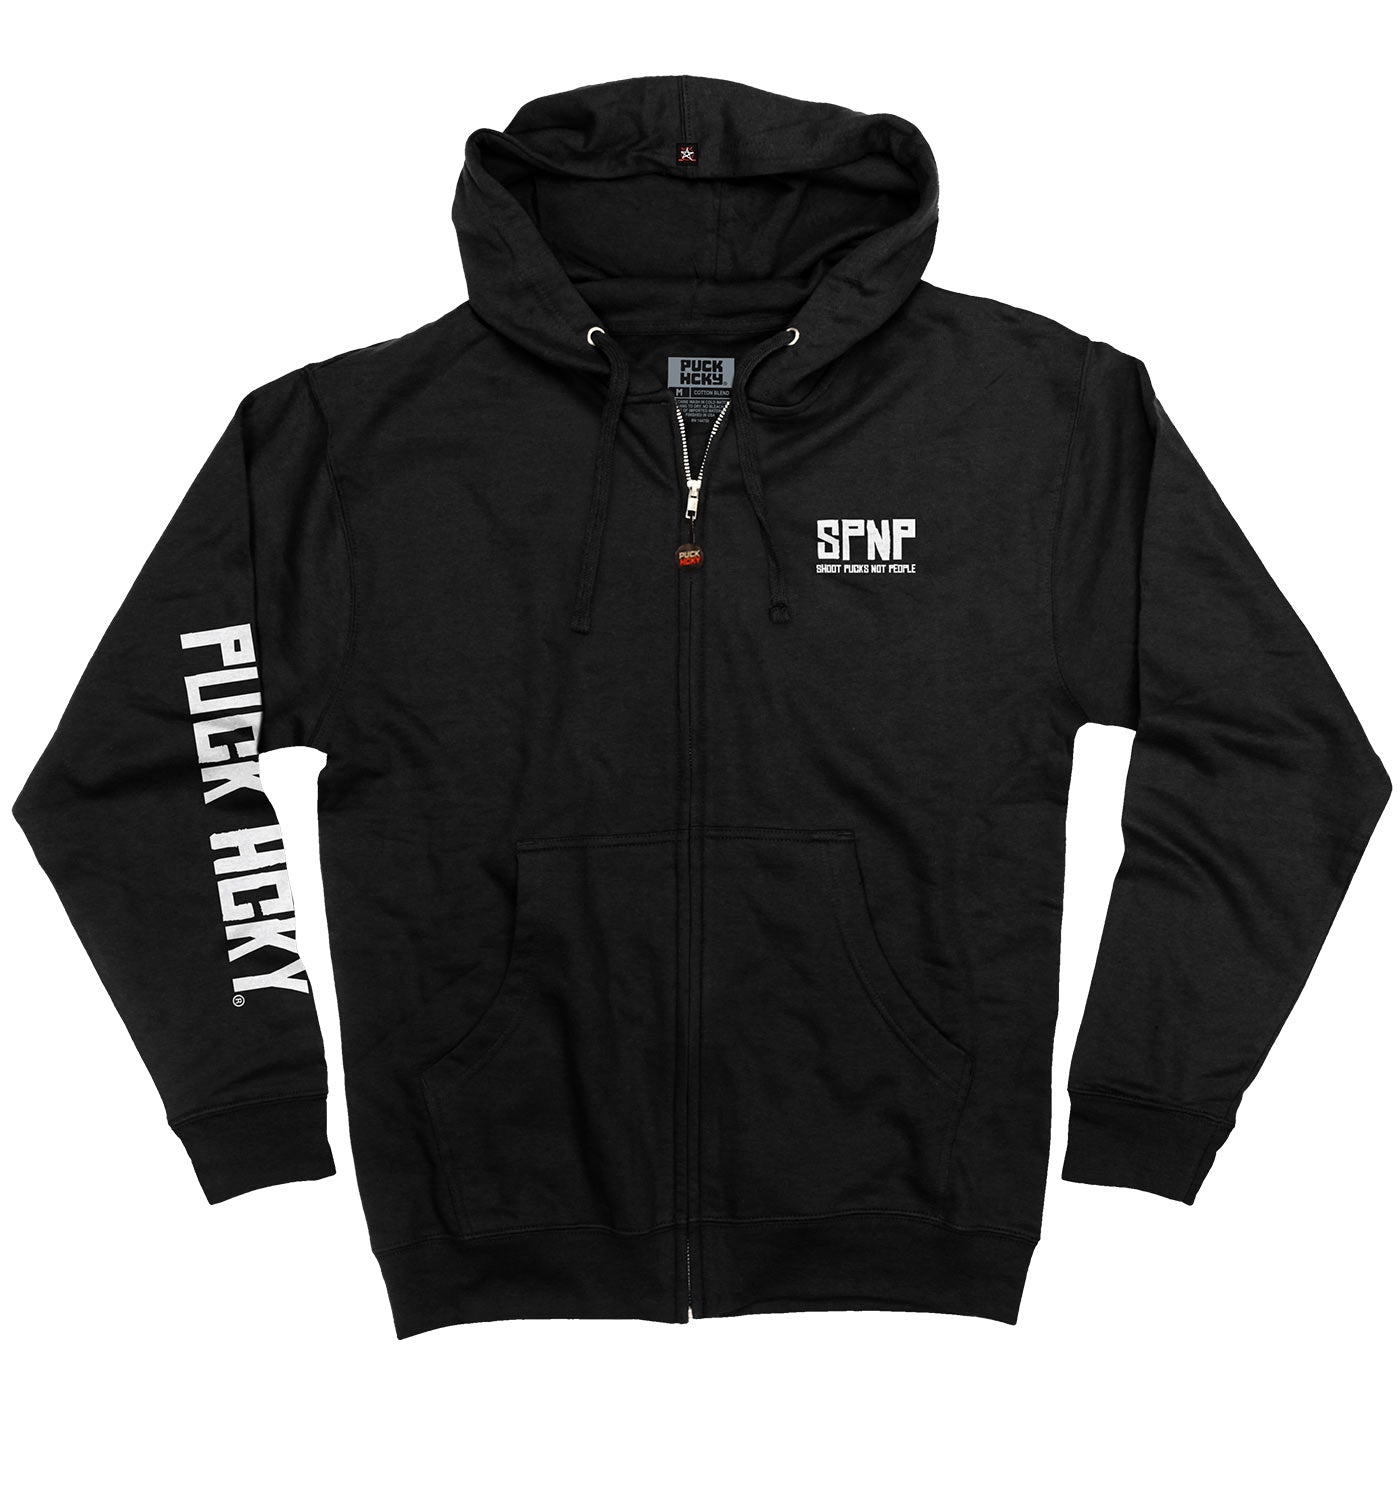 PUCK HCKY 'SHOOT PUCKS NOT PEOPLE - STACKED' full zip hockey hoodie in black front view